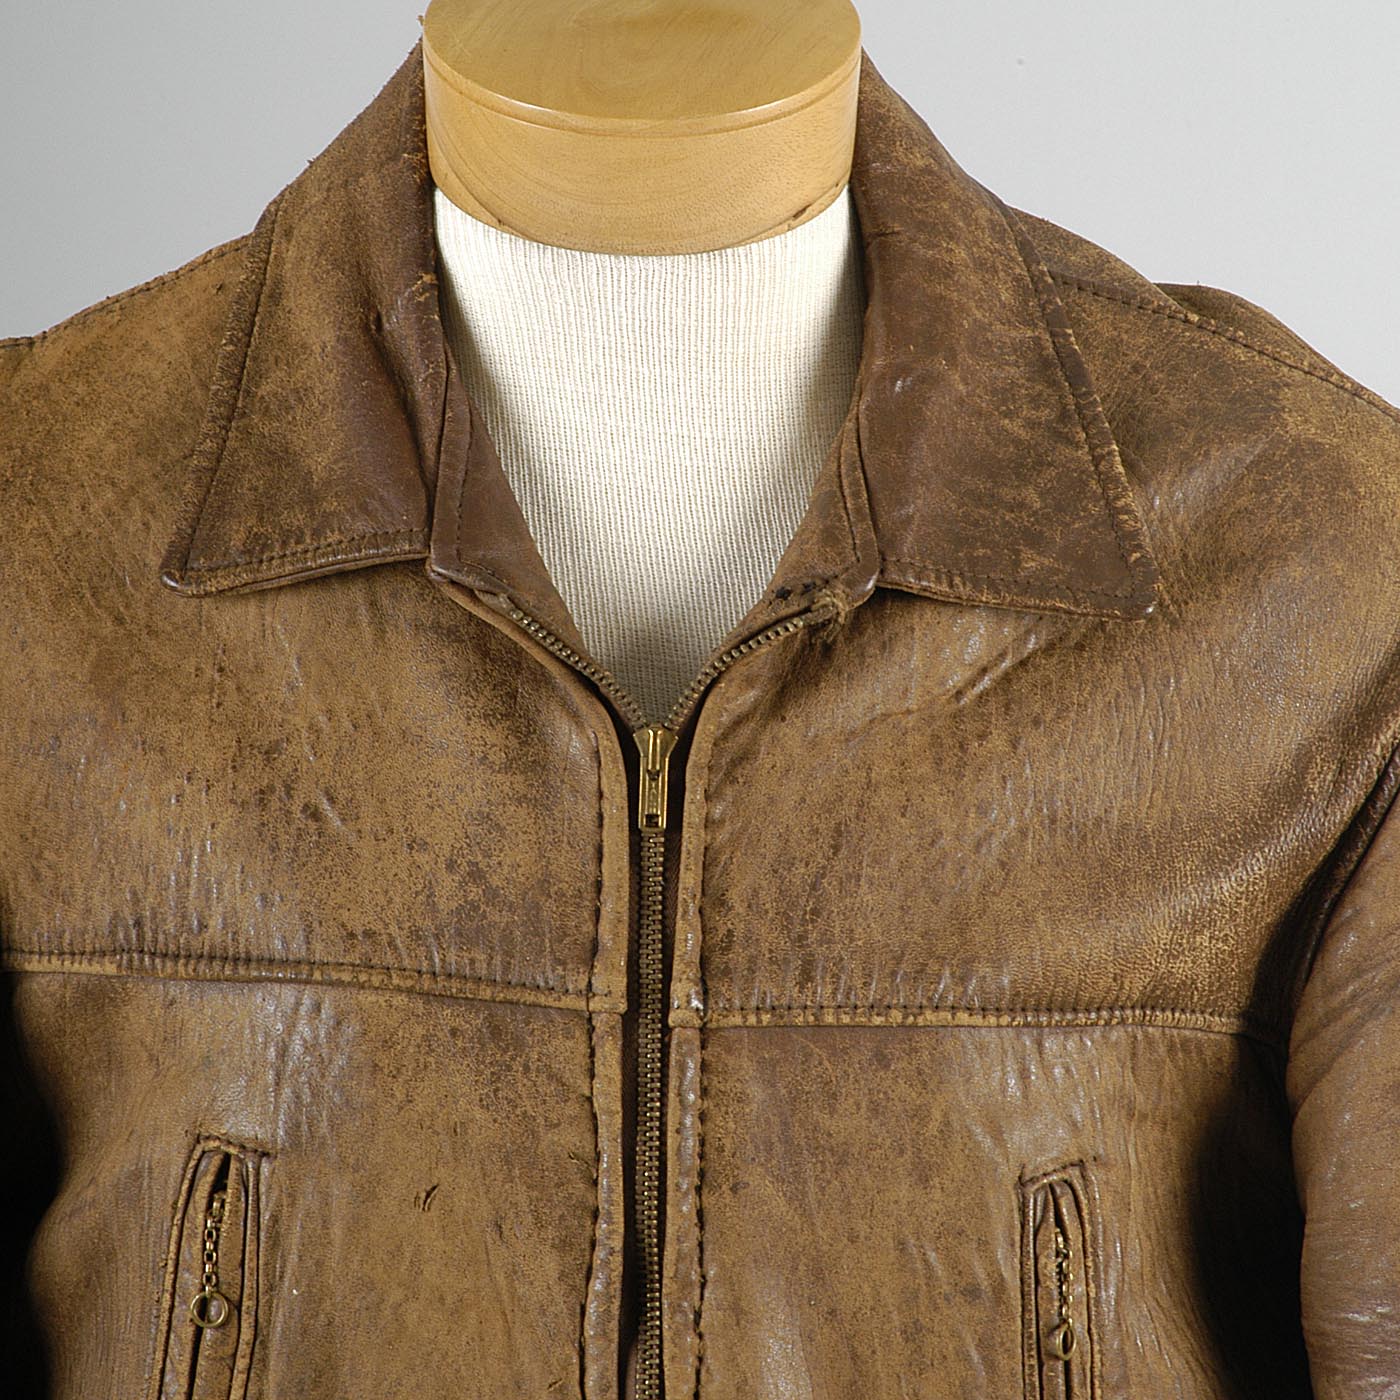 1940s Men's Kit Karson Indian Scout Leather Motorcycle Jacket